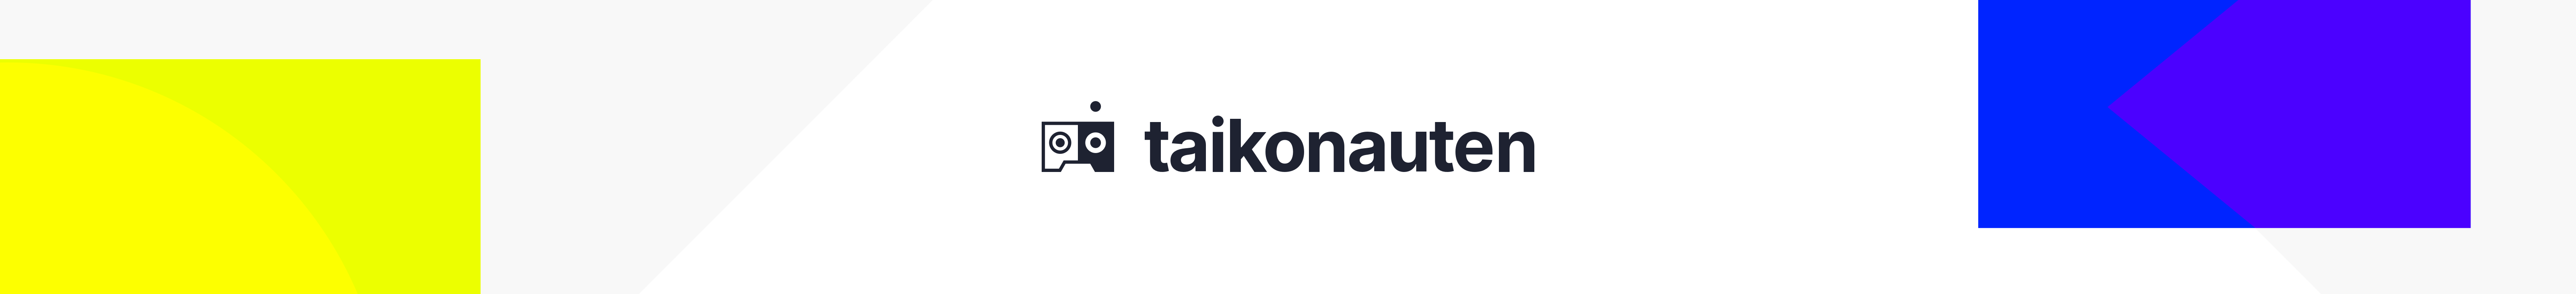 Taikonauten GmbH & Co. KGs profilbanner